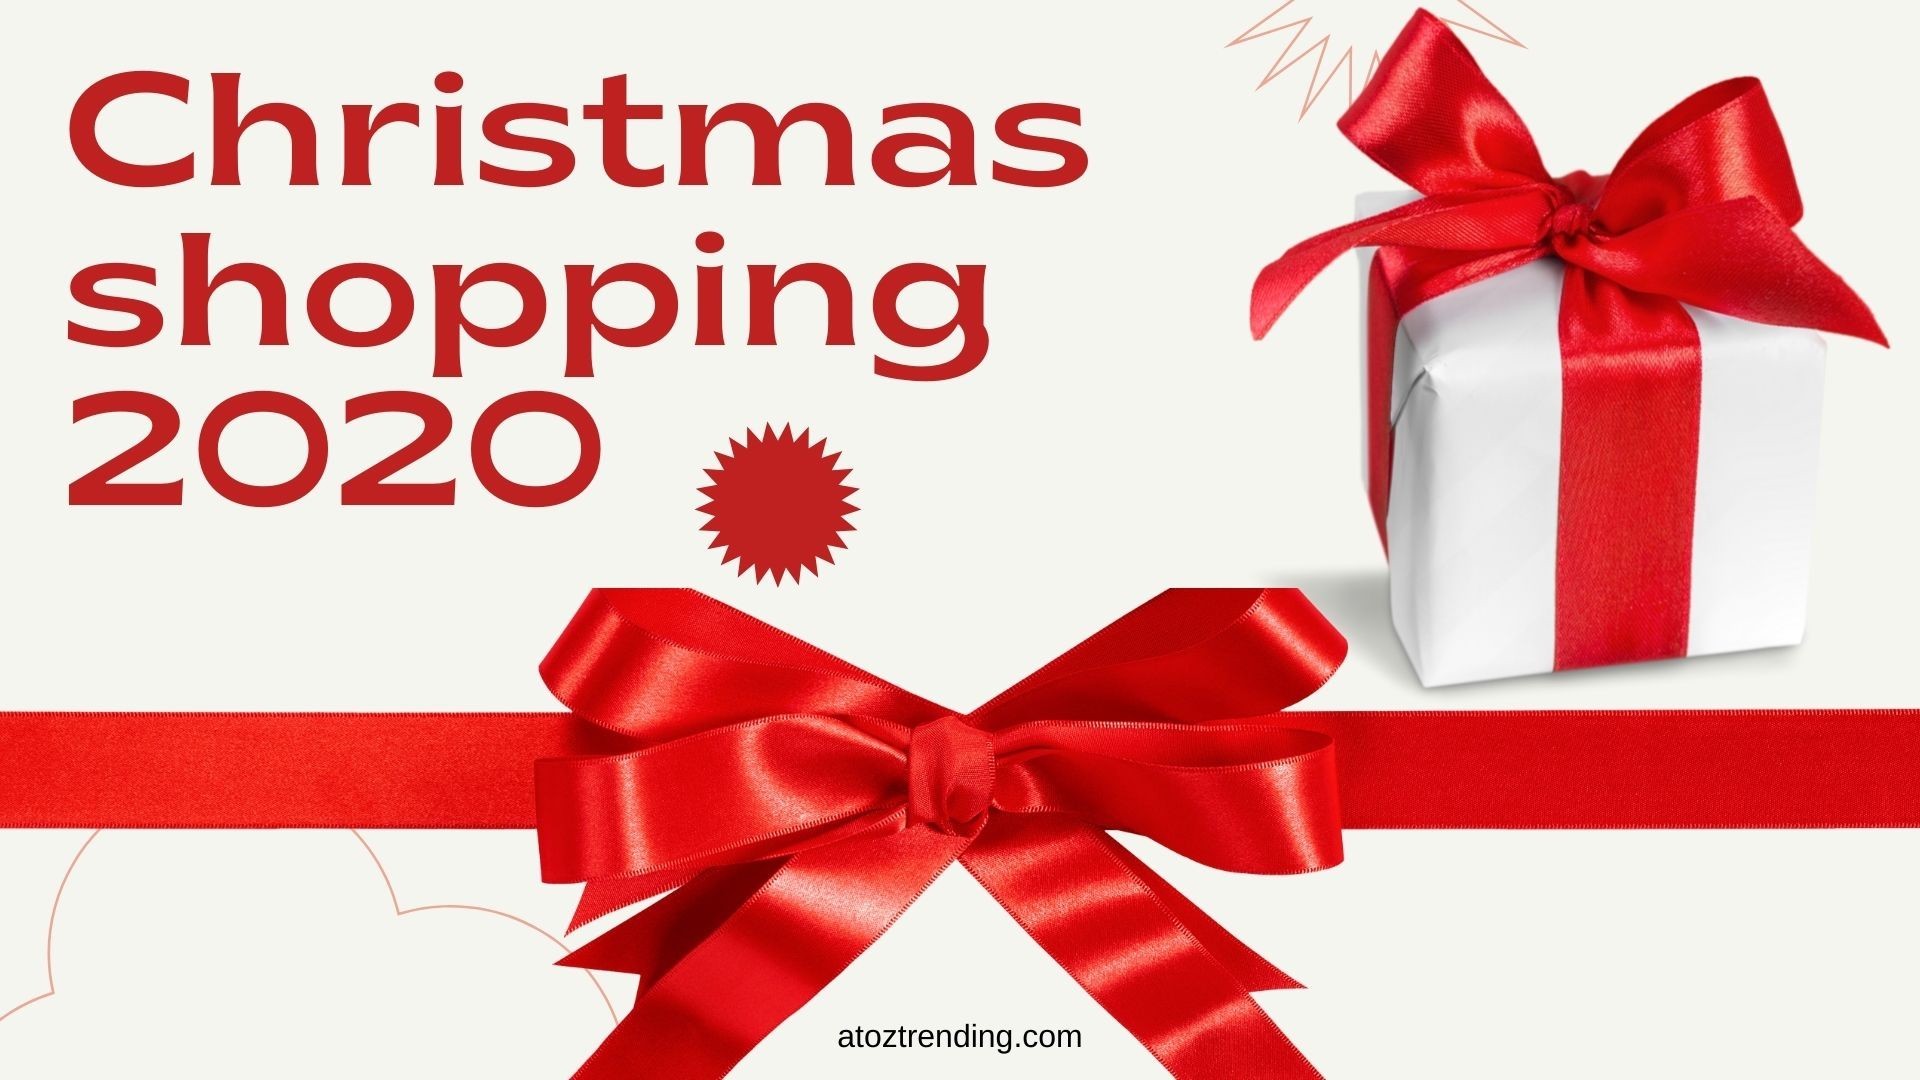 Christmas shopping 2020